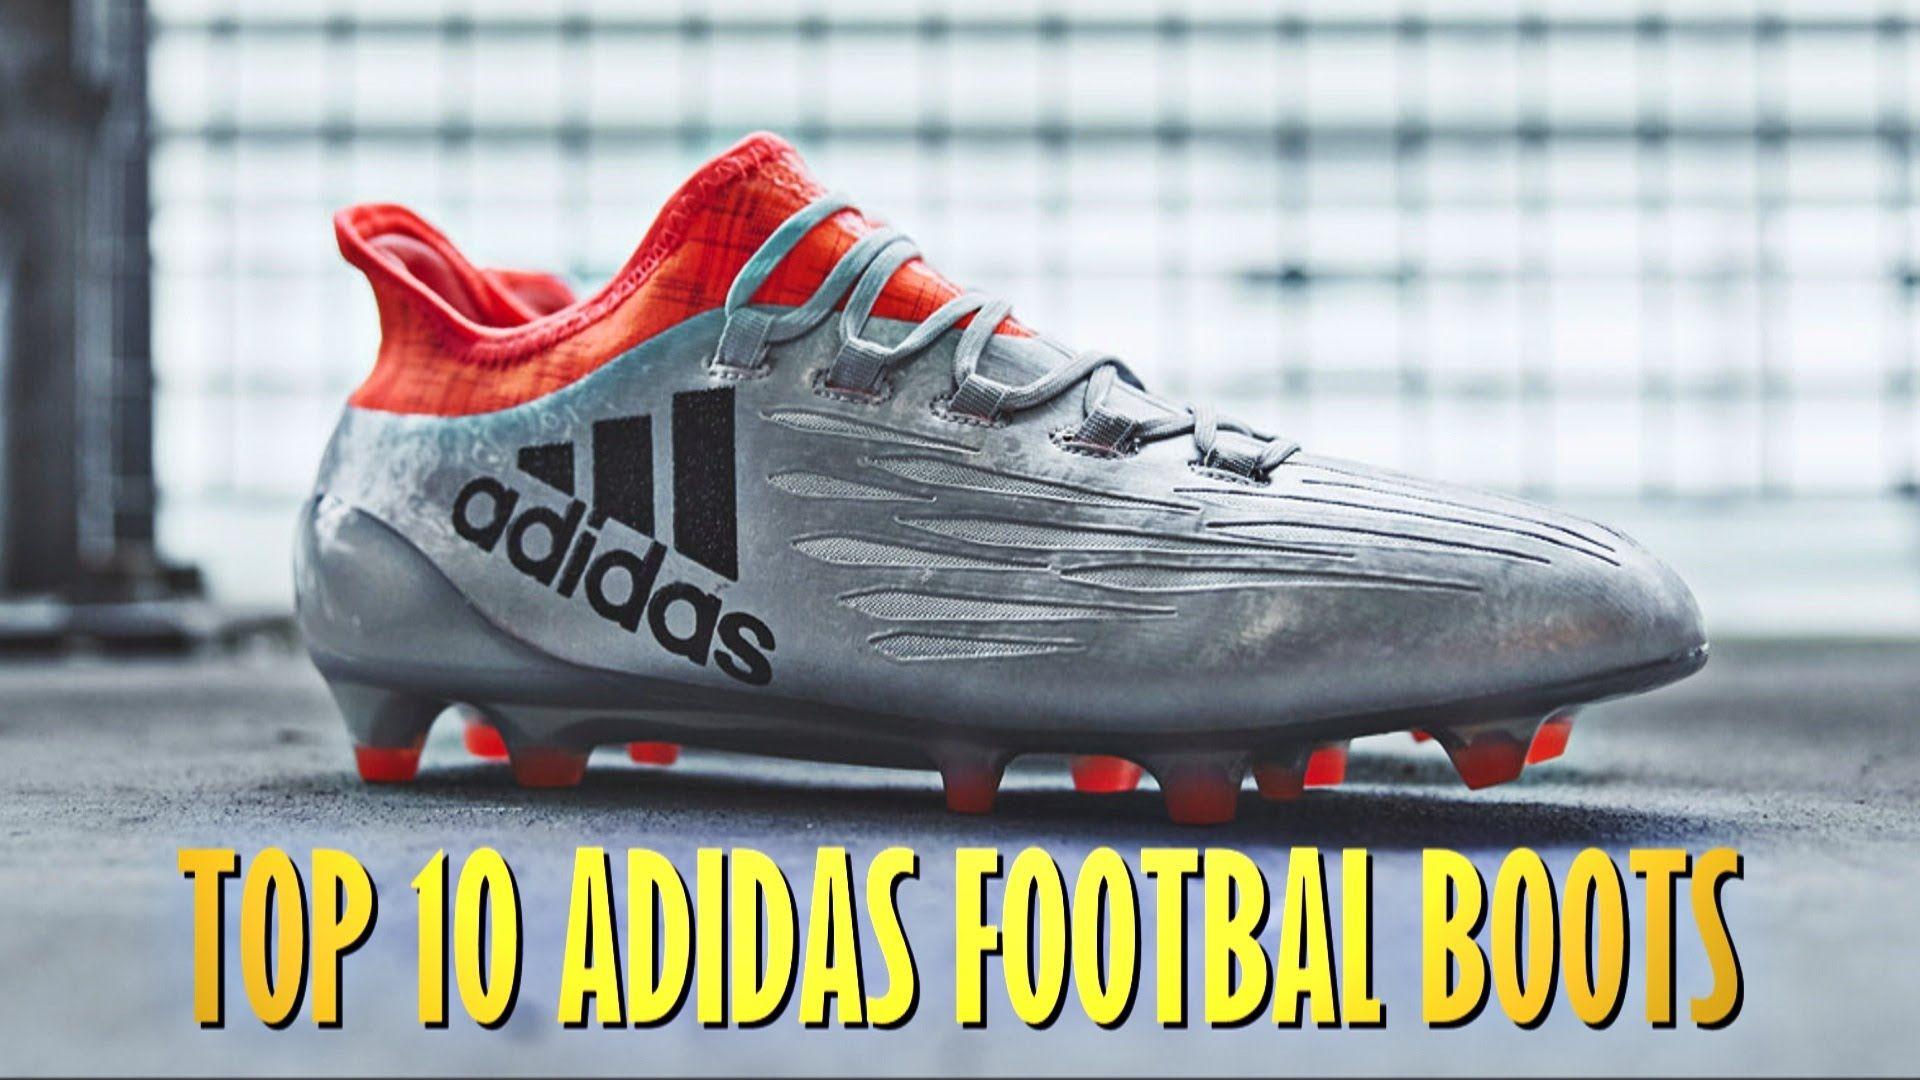 Top 10 Adidas Football Boots 2016